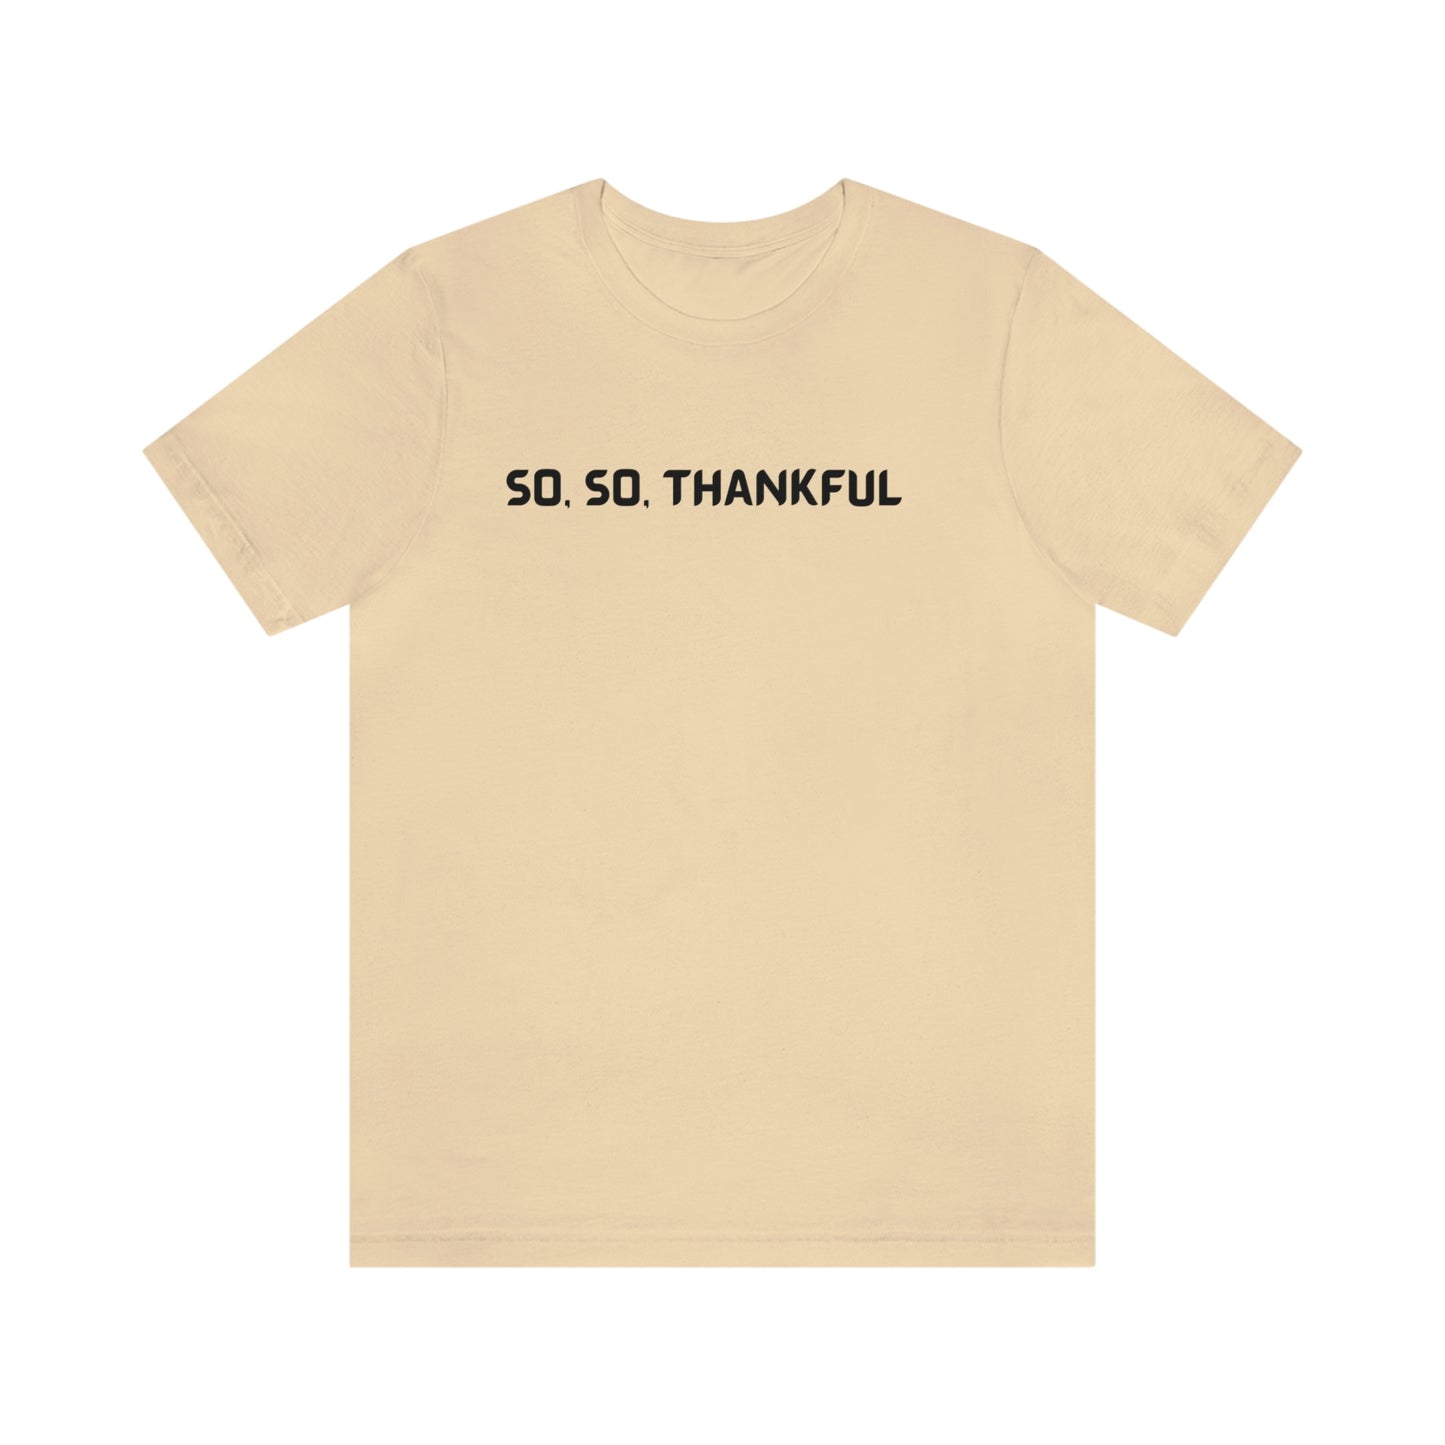 So, so thankful unisex inspirational quote t shrt, t shirt expressing gratitude